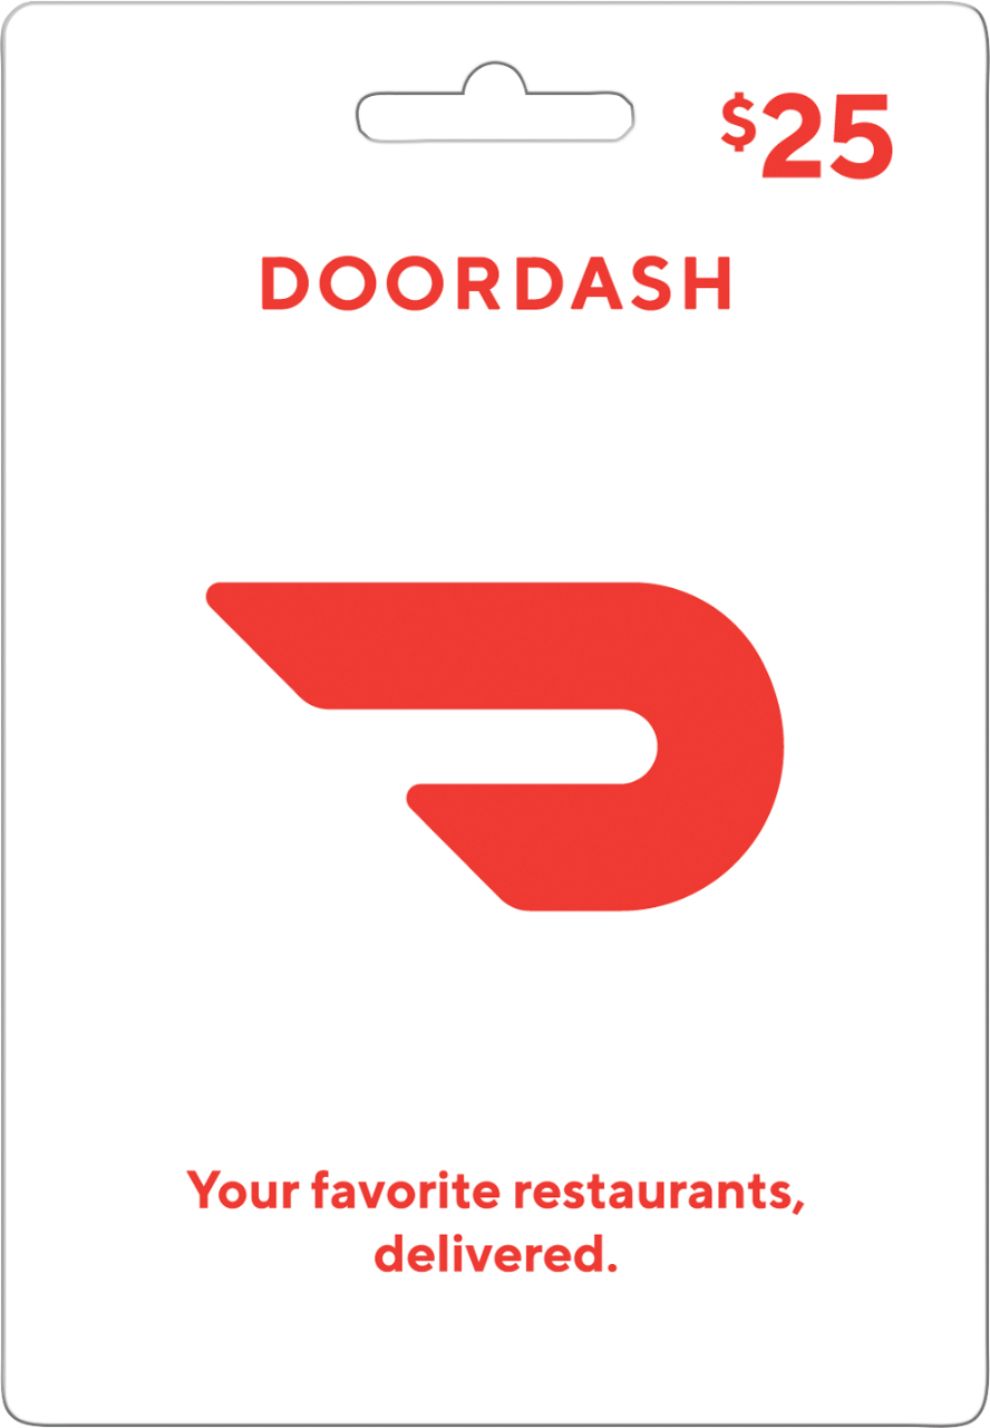 DoorDash: The Value of Speed